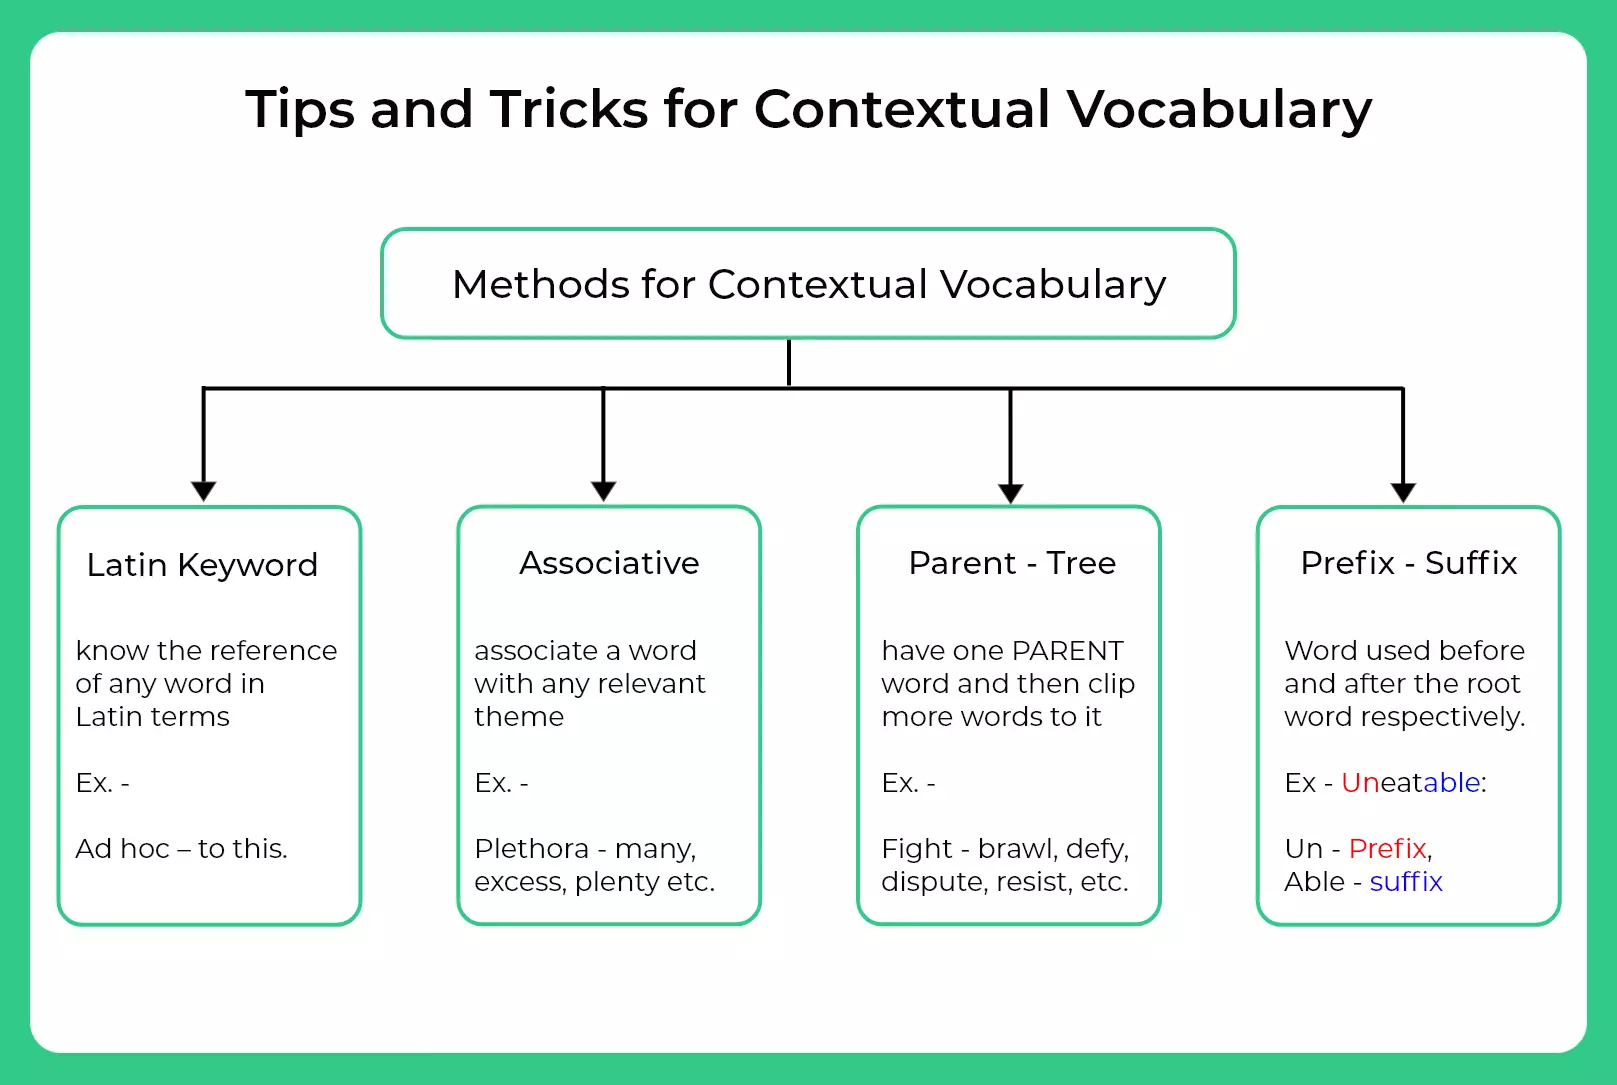 Tips and Tricks for Contextual Vocabulary